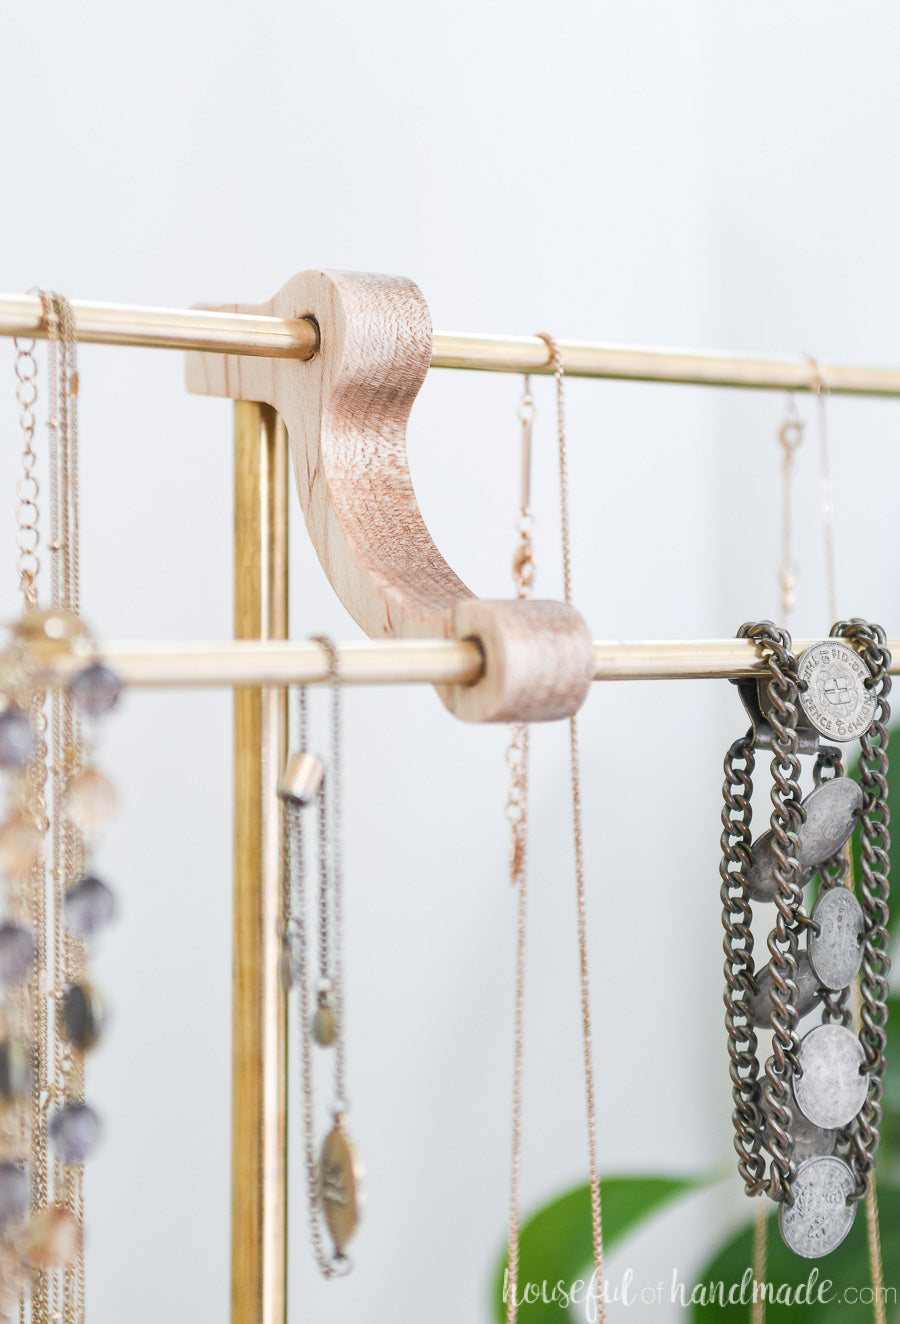 Scrap Wood Necklace Holder Build Plans – Houseful of Handmade